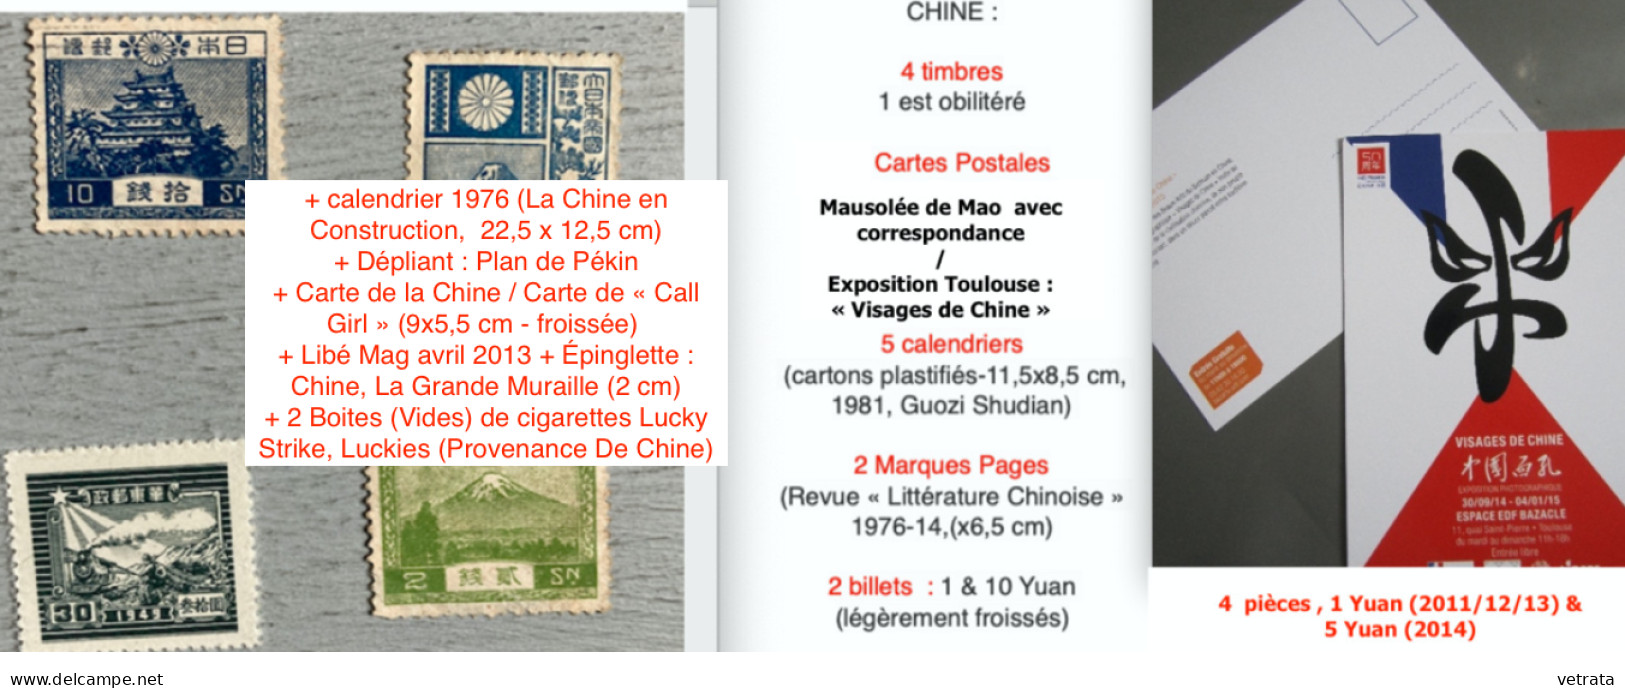 CHINE : 1 Album, 1 Guide & 1 Revue. CHINE (Larousse-Monde & Voyages-1988) / Guide Hachette Visa : À Pékin & En Chine, 19 - Bücherpakete